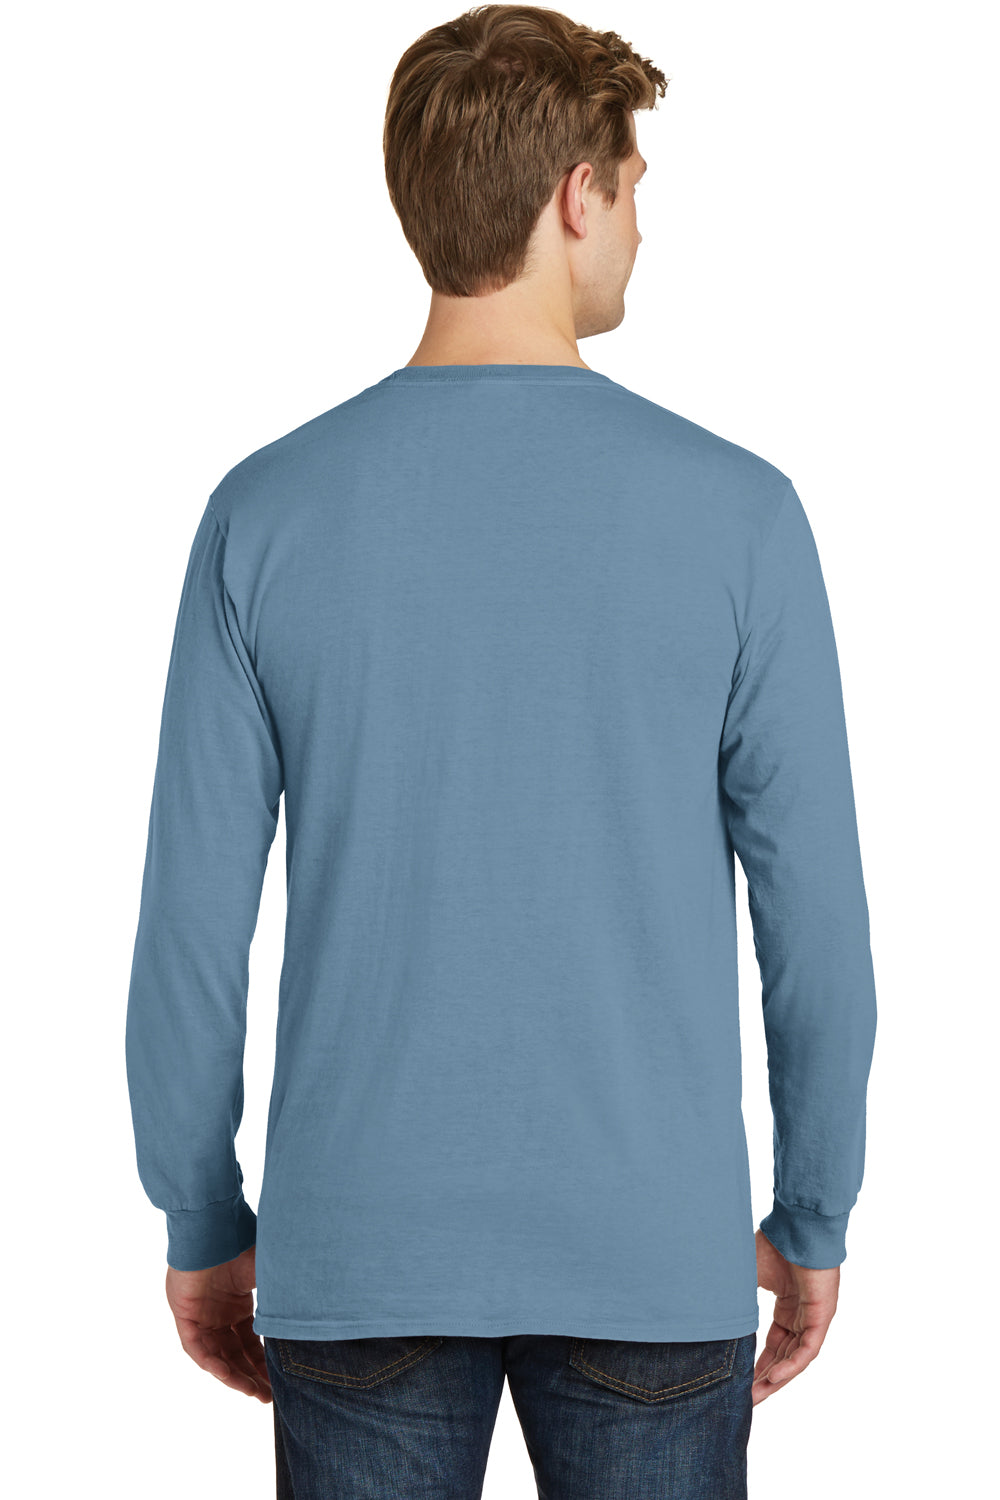 Port & Company PC099LSP Mens Beach Wash Long Sleeve Crewneck T-Shirt w/ Pocket Mist Blue Back